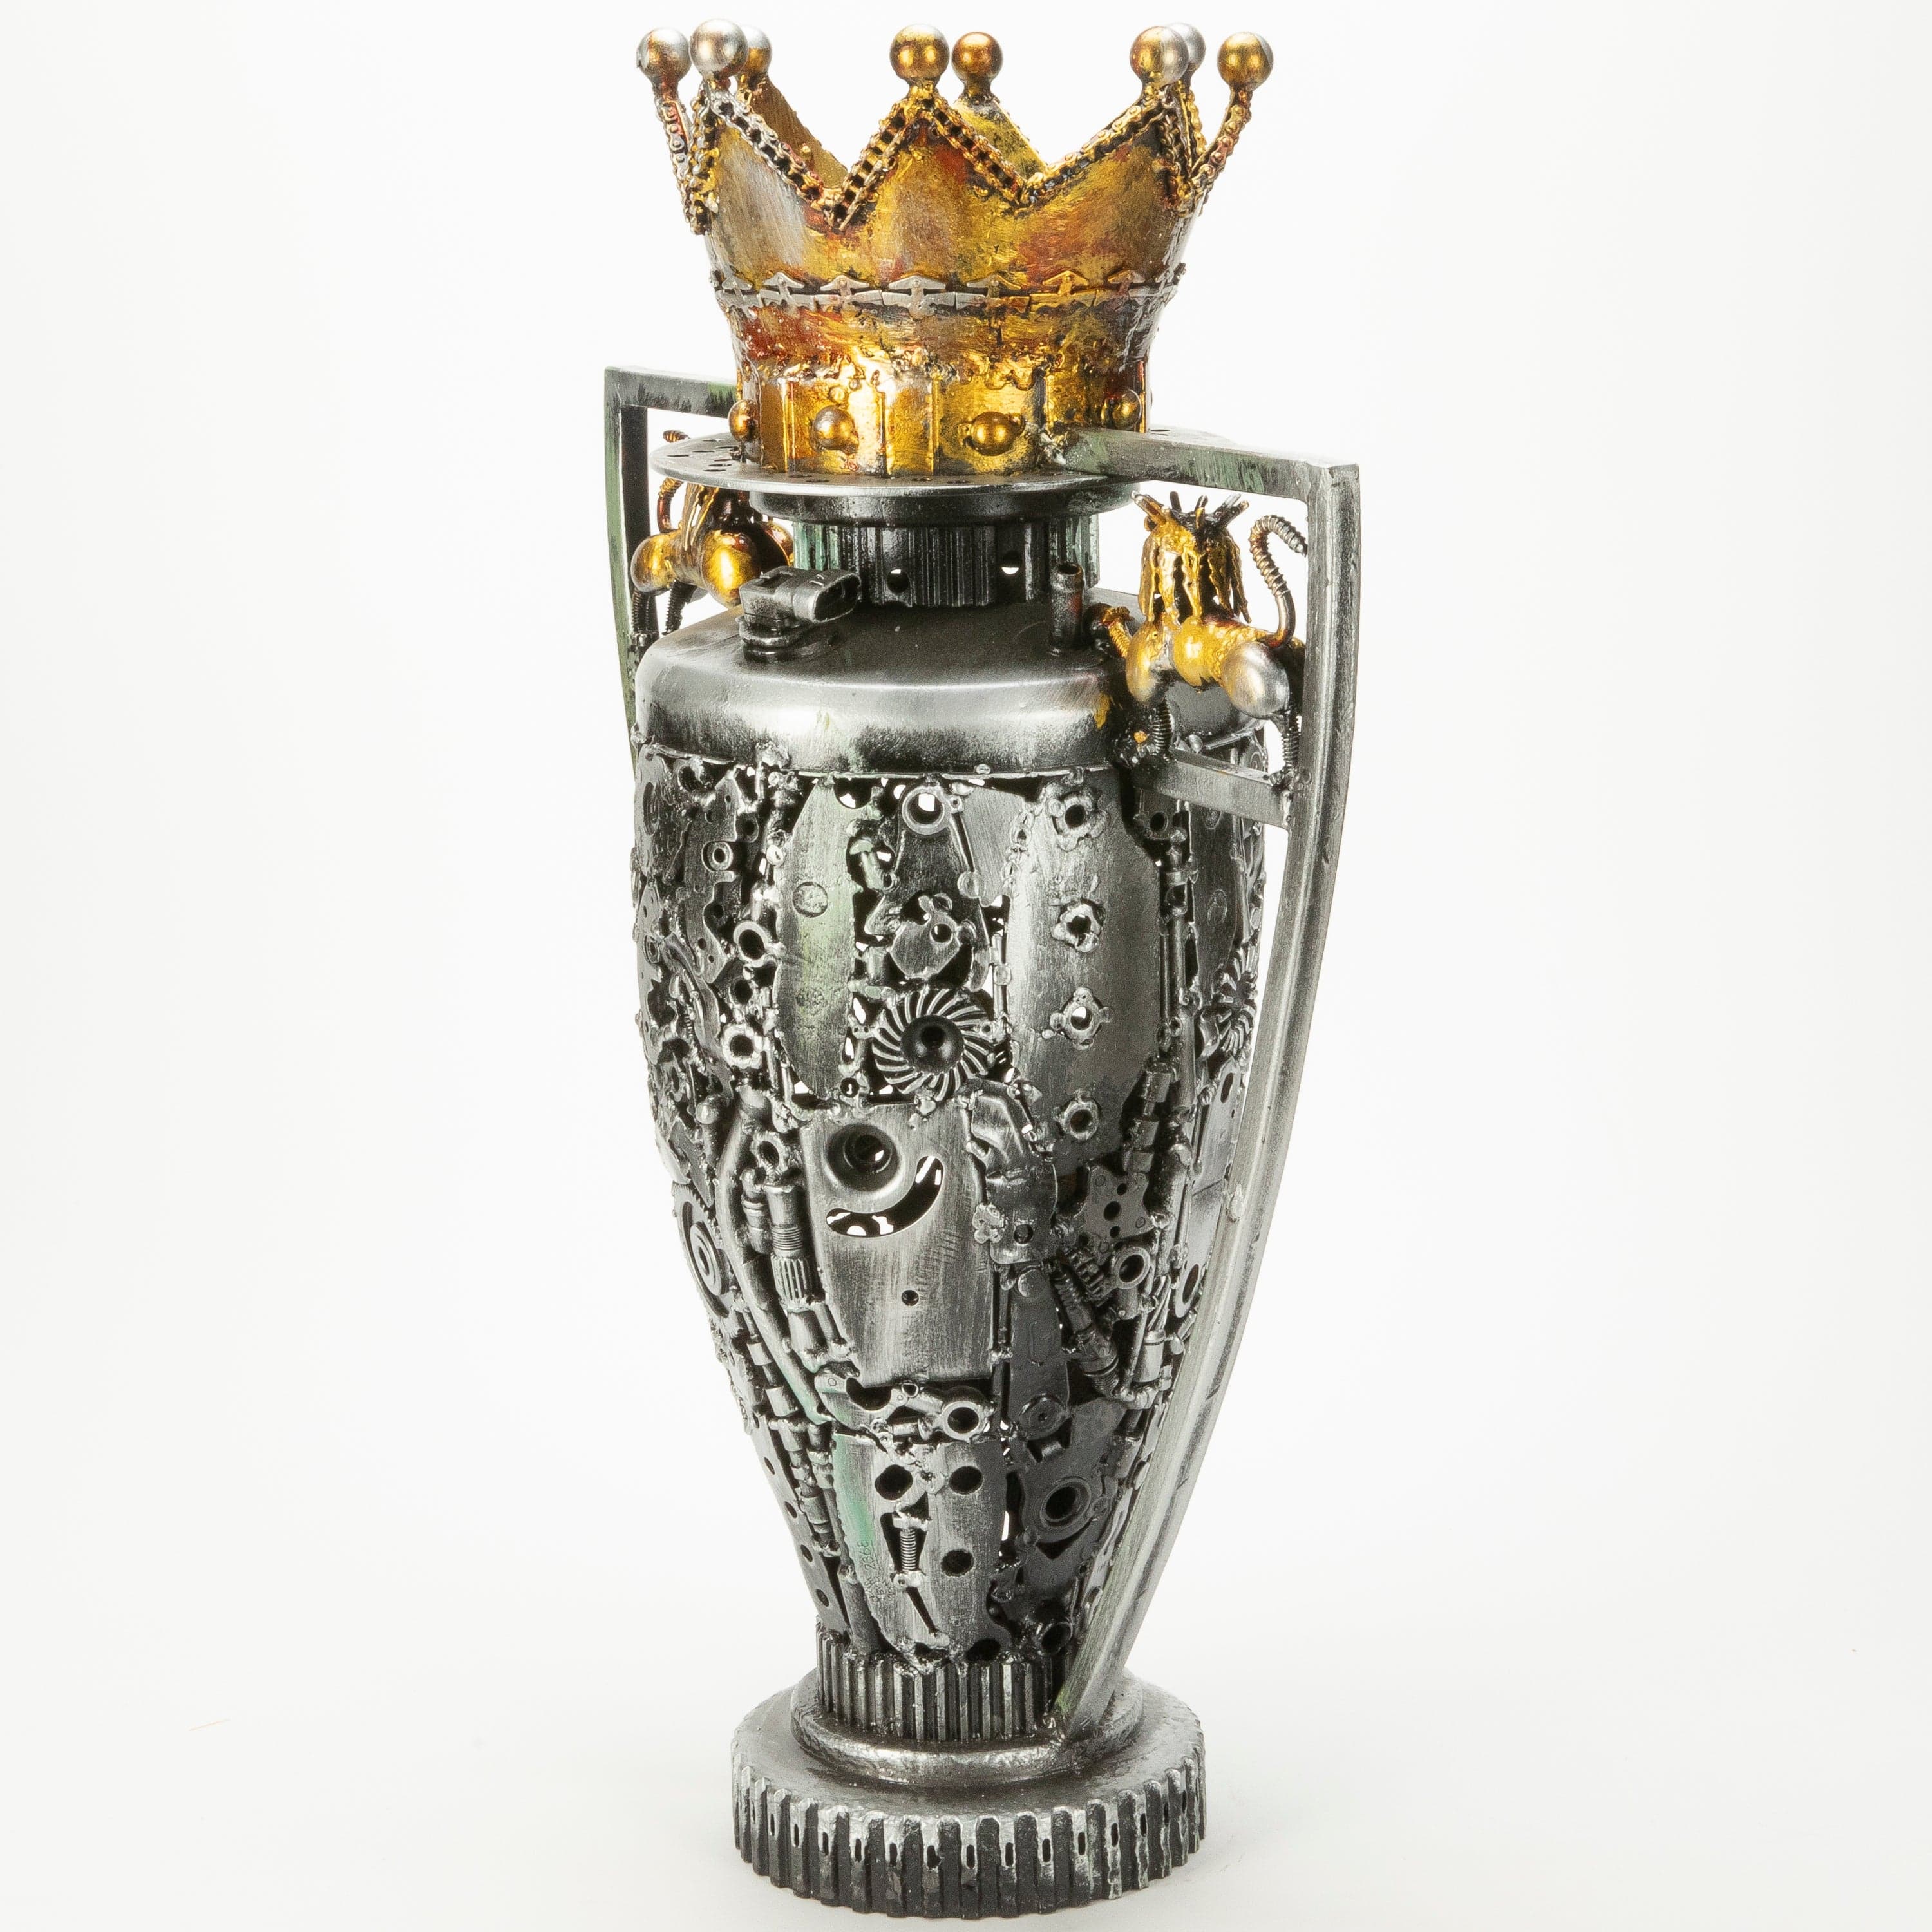 KALIFANO Recycled Metal Art 24" Premier League Trophy Inspired Recycled Metal Art Sculpture RMS-PLT60-N